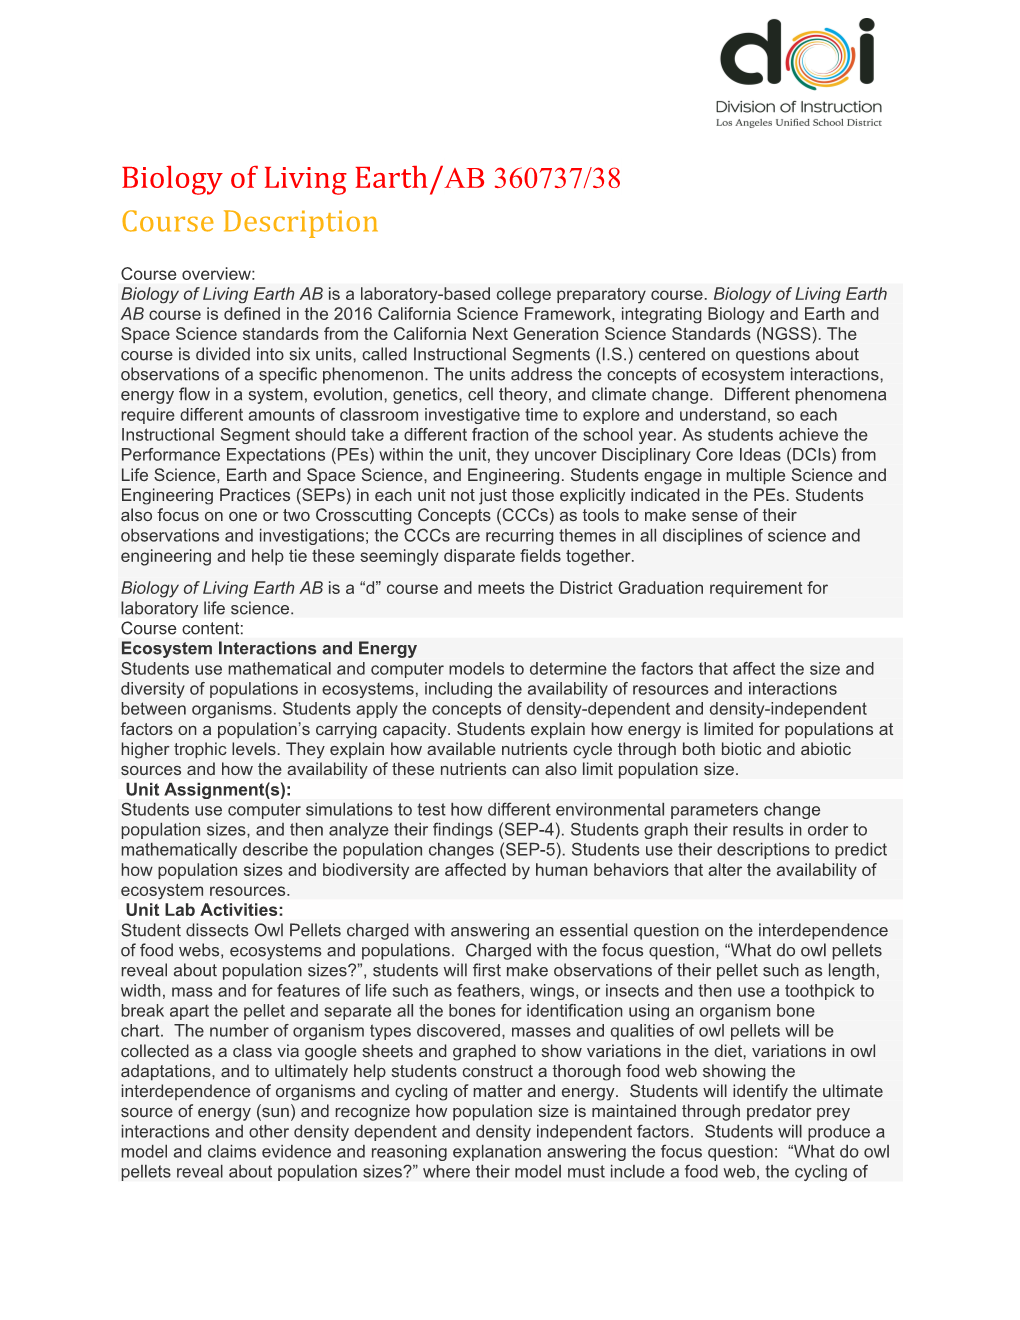 Biology of Living Earth/AB 360737/38 Course Description